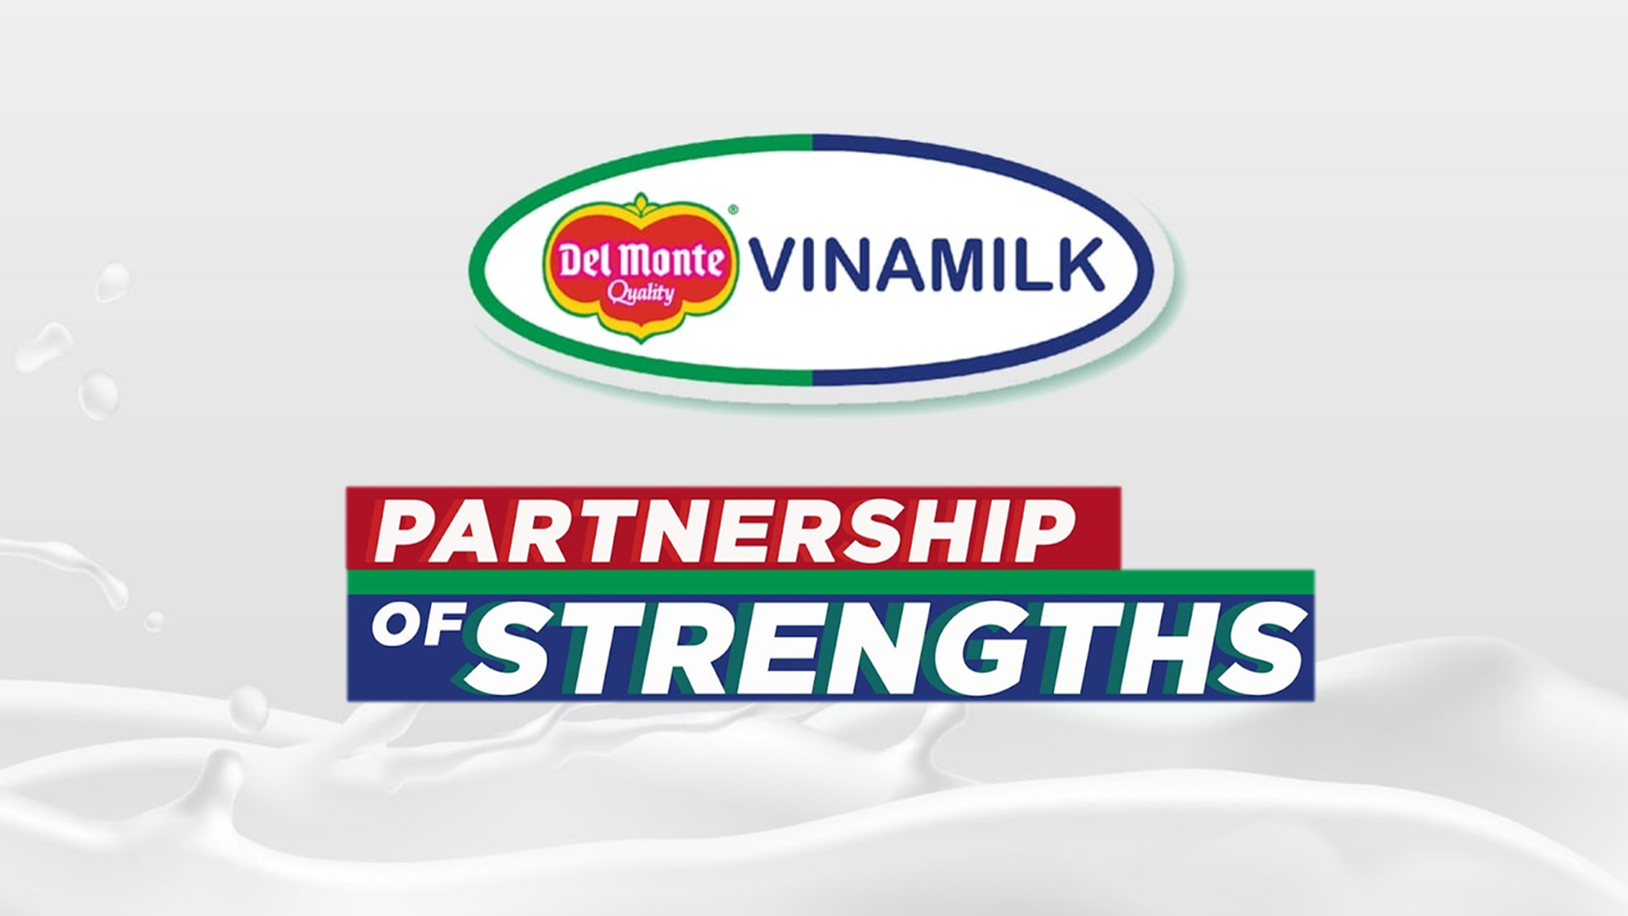 Vinamilk establishes dairy joint venture with Del Monte Philippines